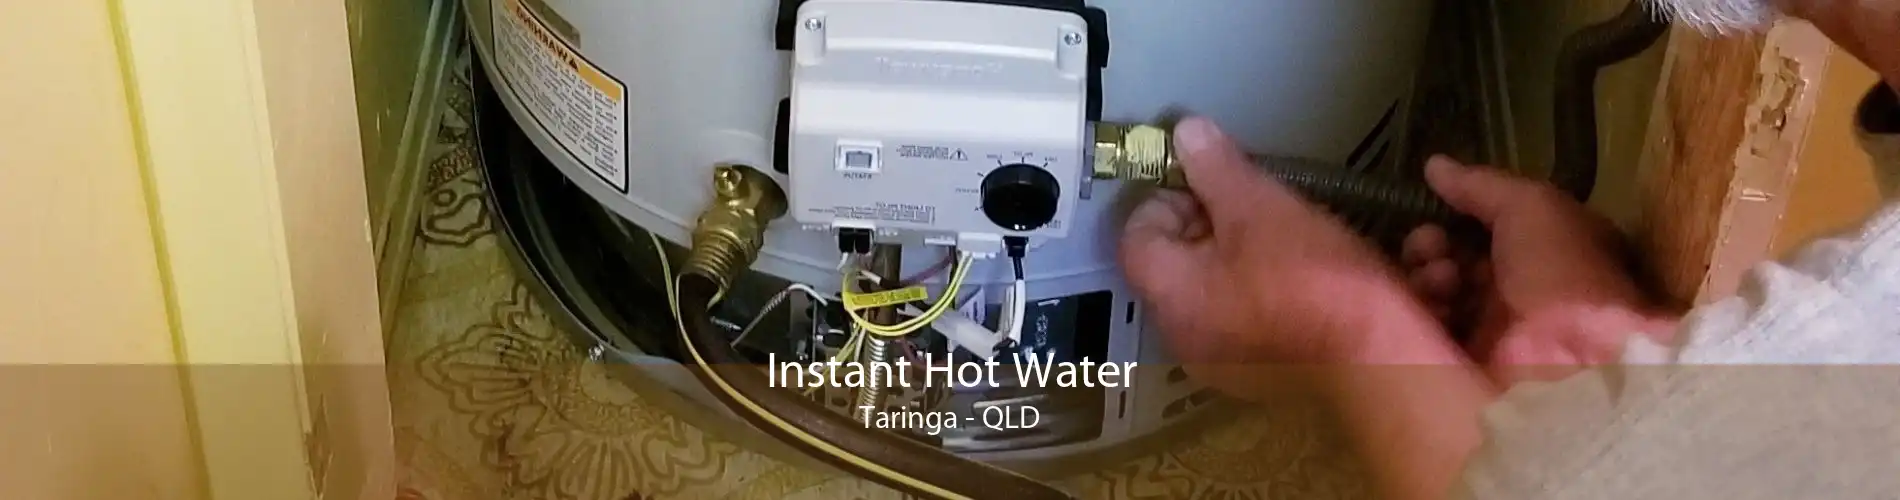 Instant Hot Water Taringa - QLD